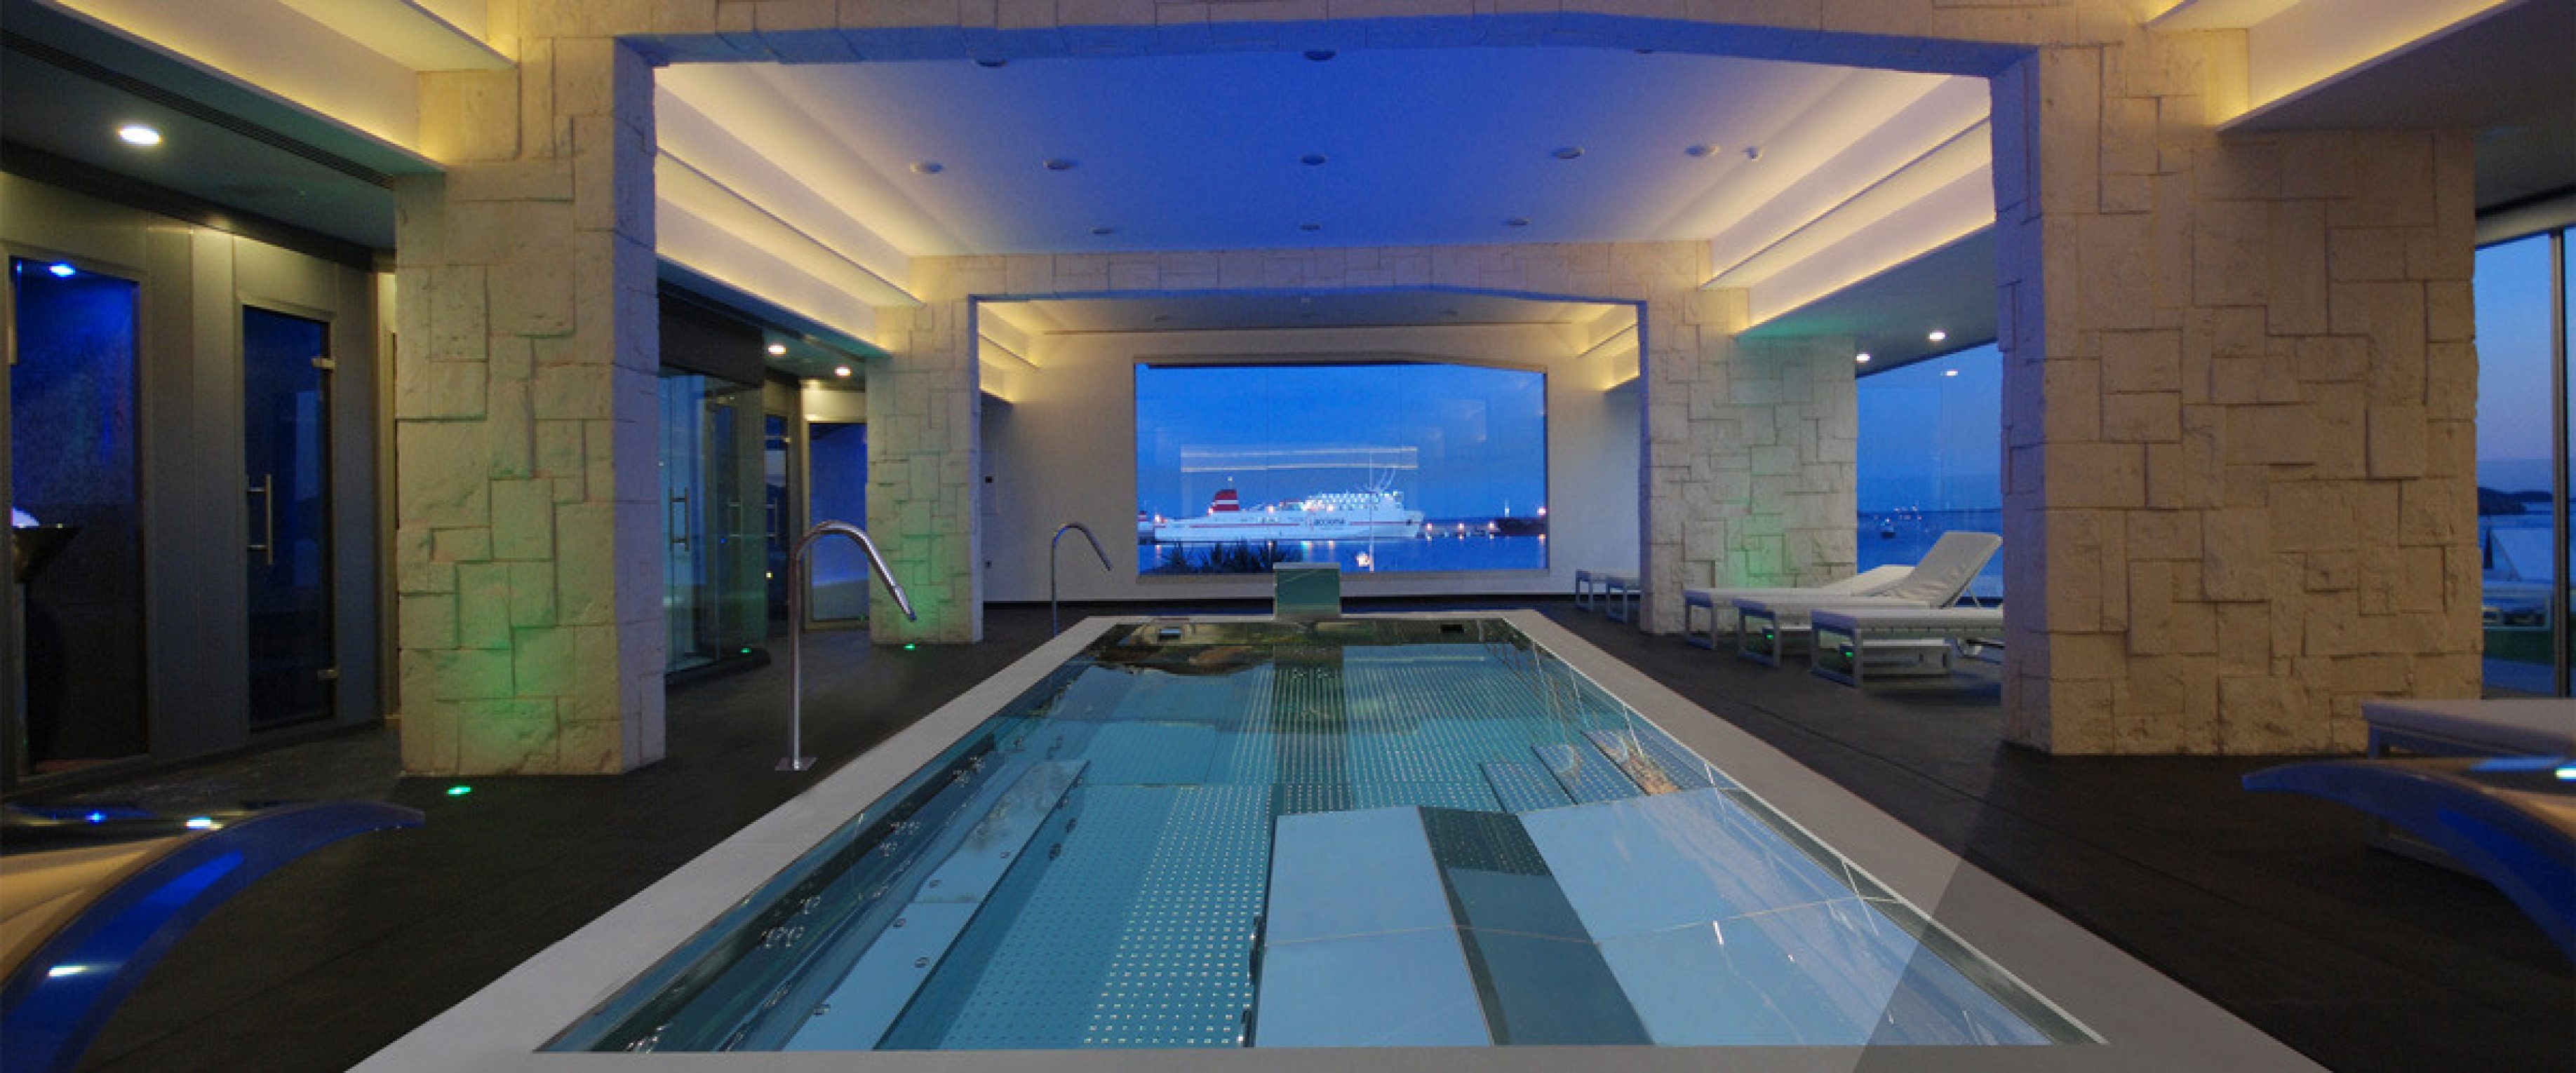 Inbeca piscina inox skimmer instalacion 1 1200x500